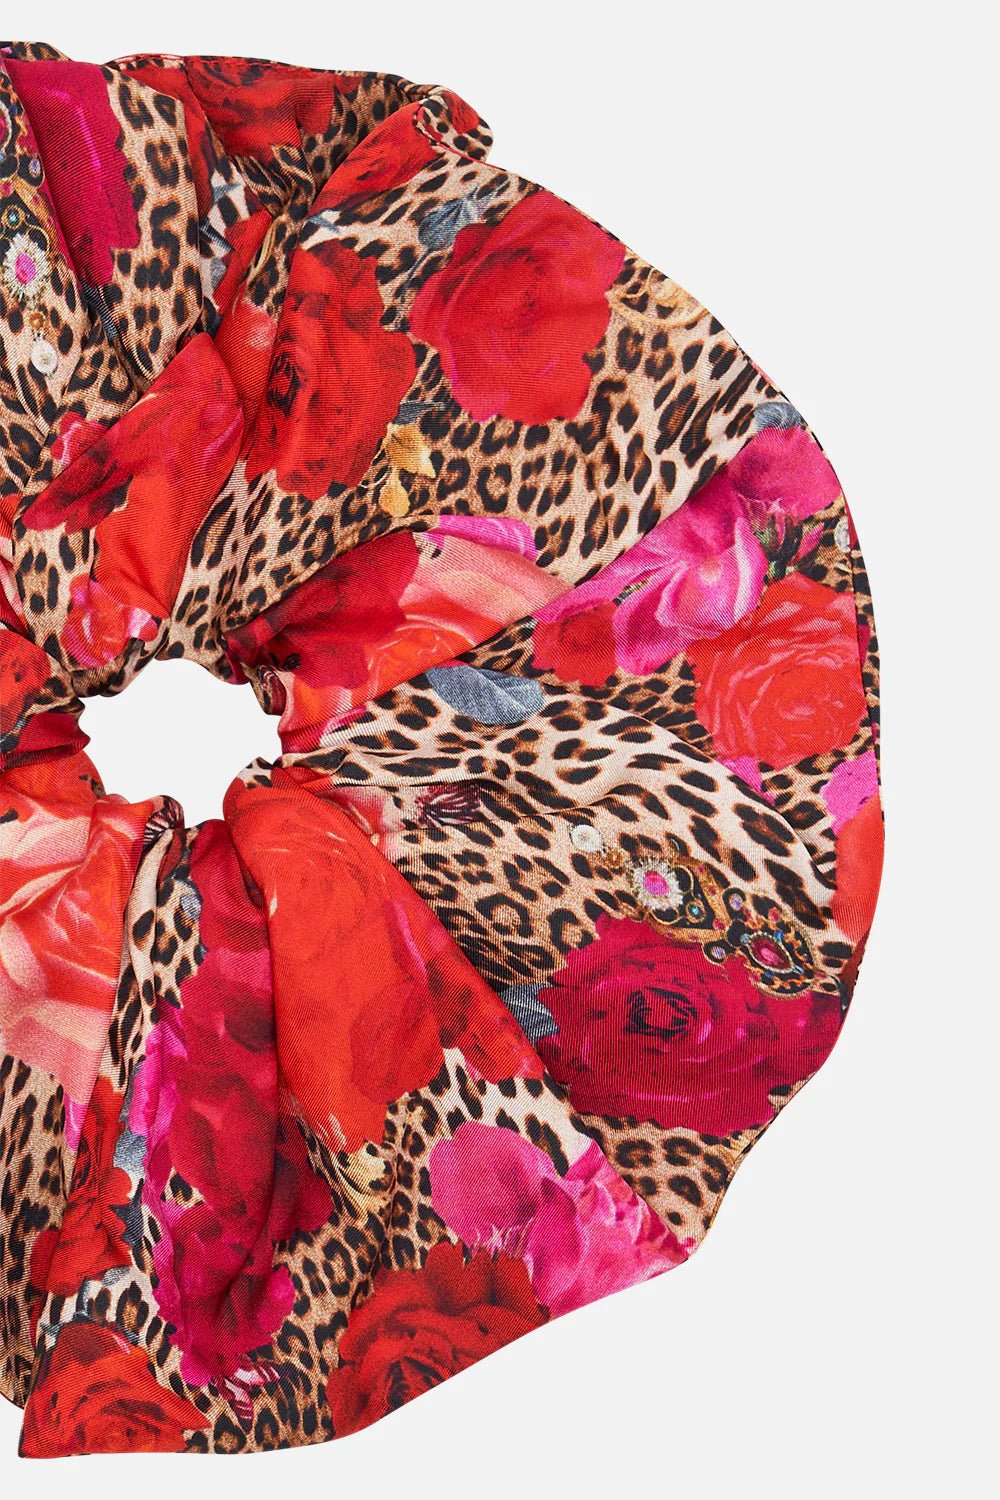 Camilla Oversized Scrunchie Heart Like A Wildflower - Pinkhill, Darwin boutique, Australian high end fashion, Darwin Fashion